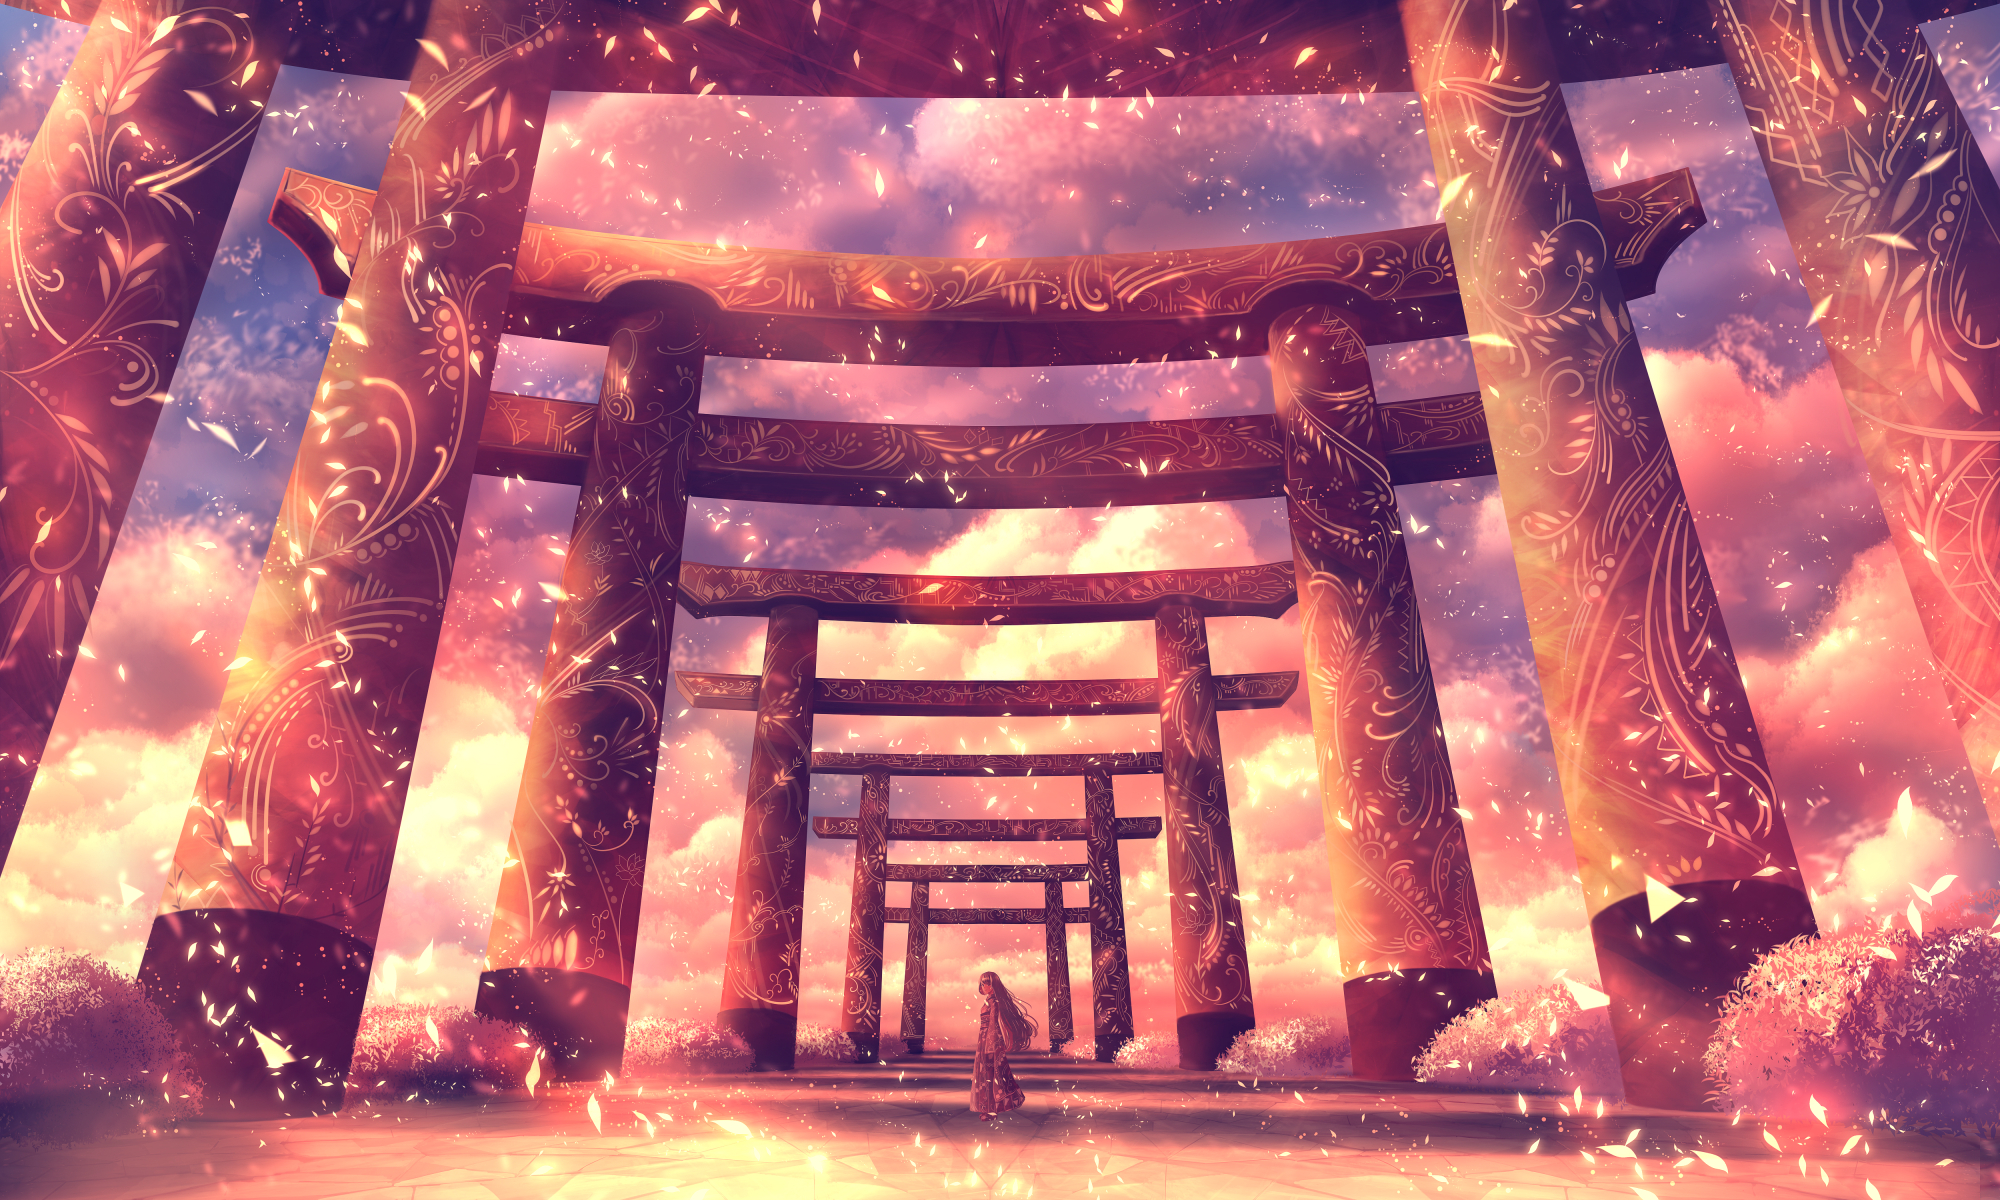 Anime Shrine HD Wallpaper by しゅろく/shurock